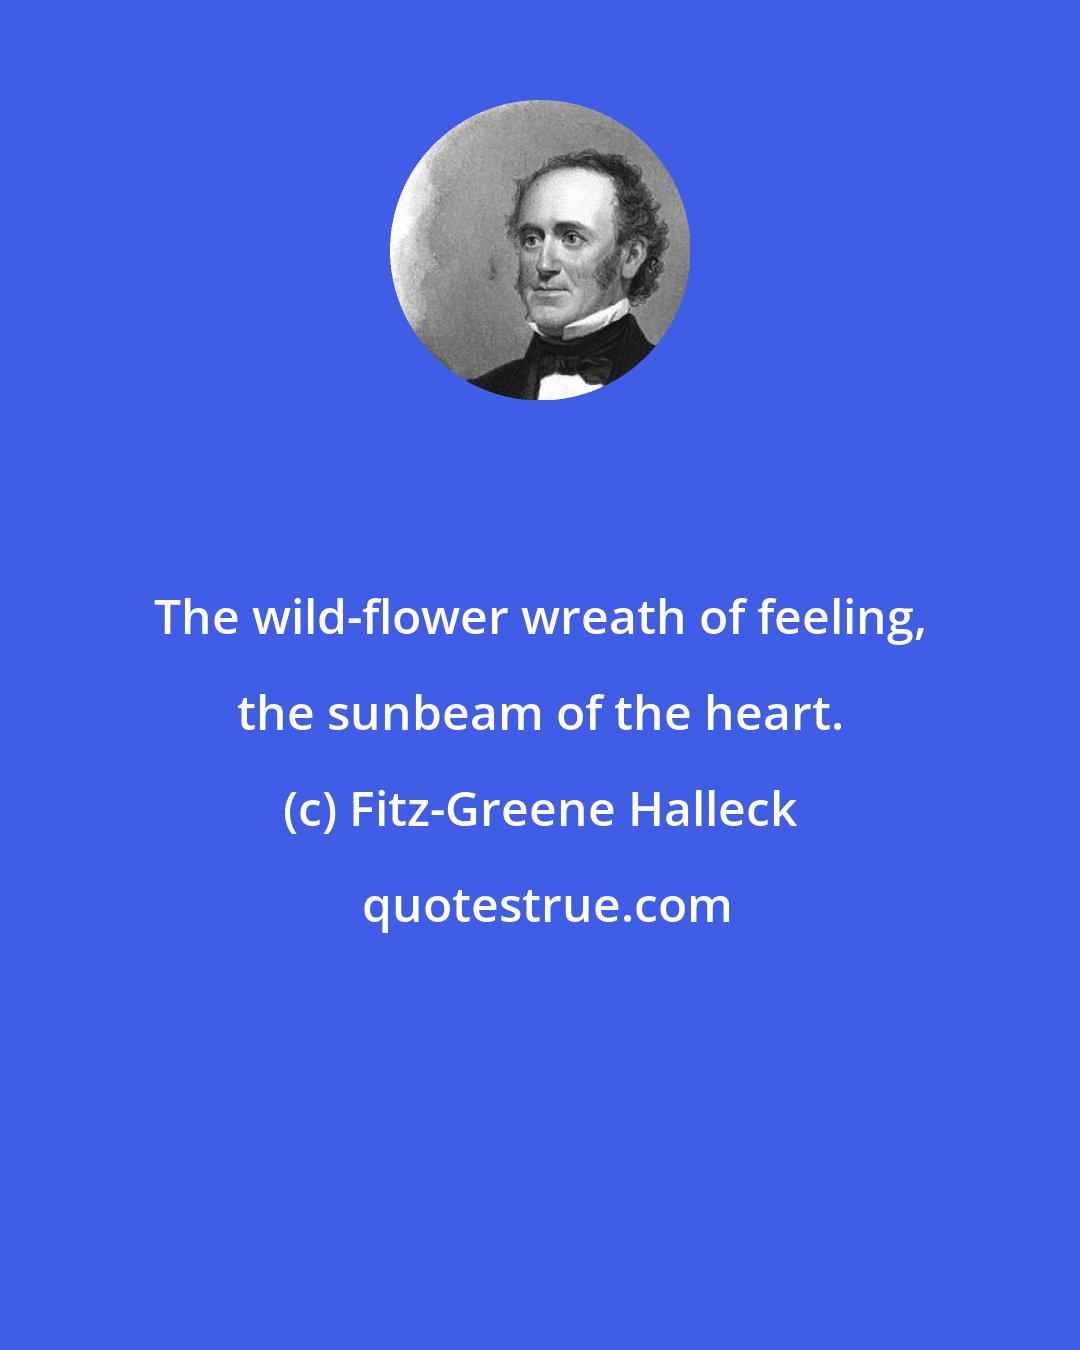 Fitz-Greene Halleck: The wild-flower wreath of feeling, the sunbeam of the heart.